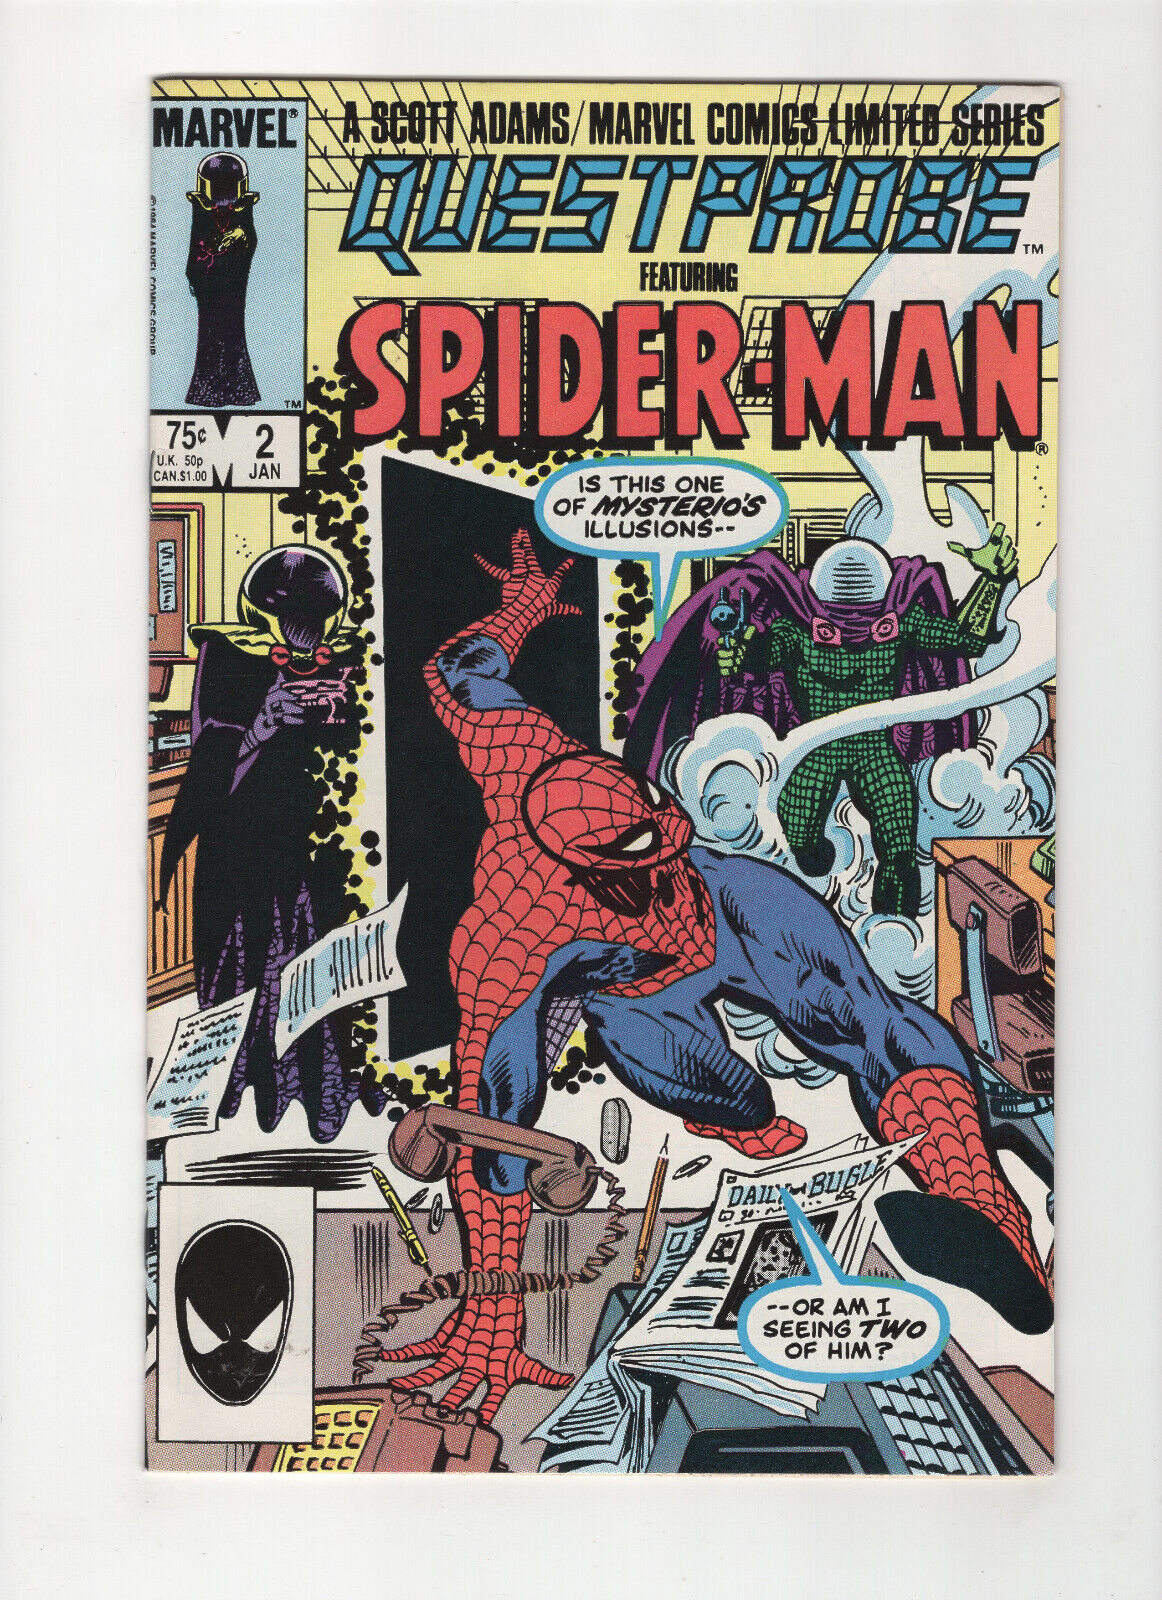 Questprobe Featuring Spider-Man #2 (Marvel Comics 1985)